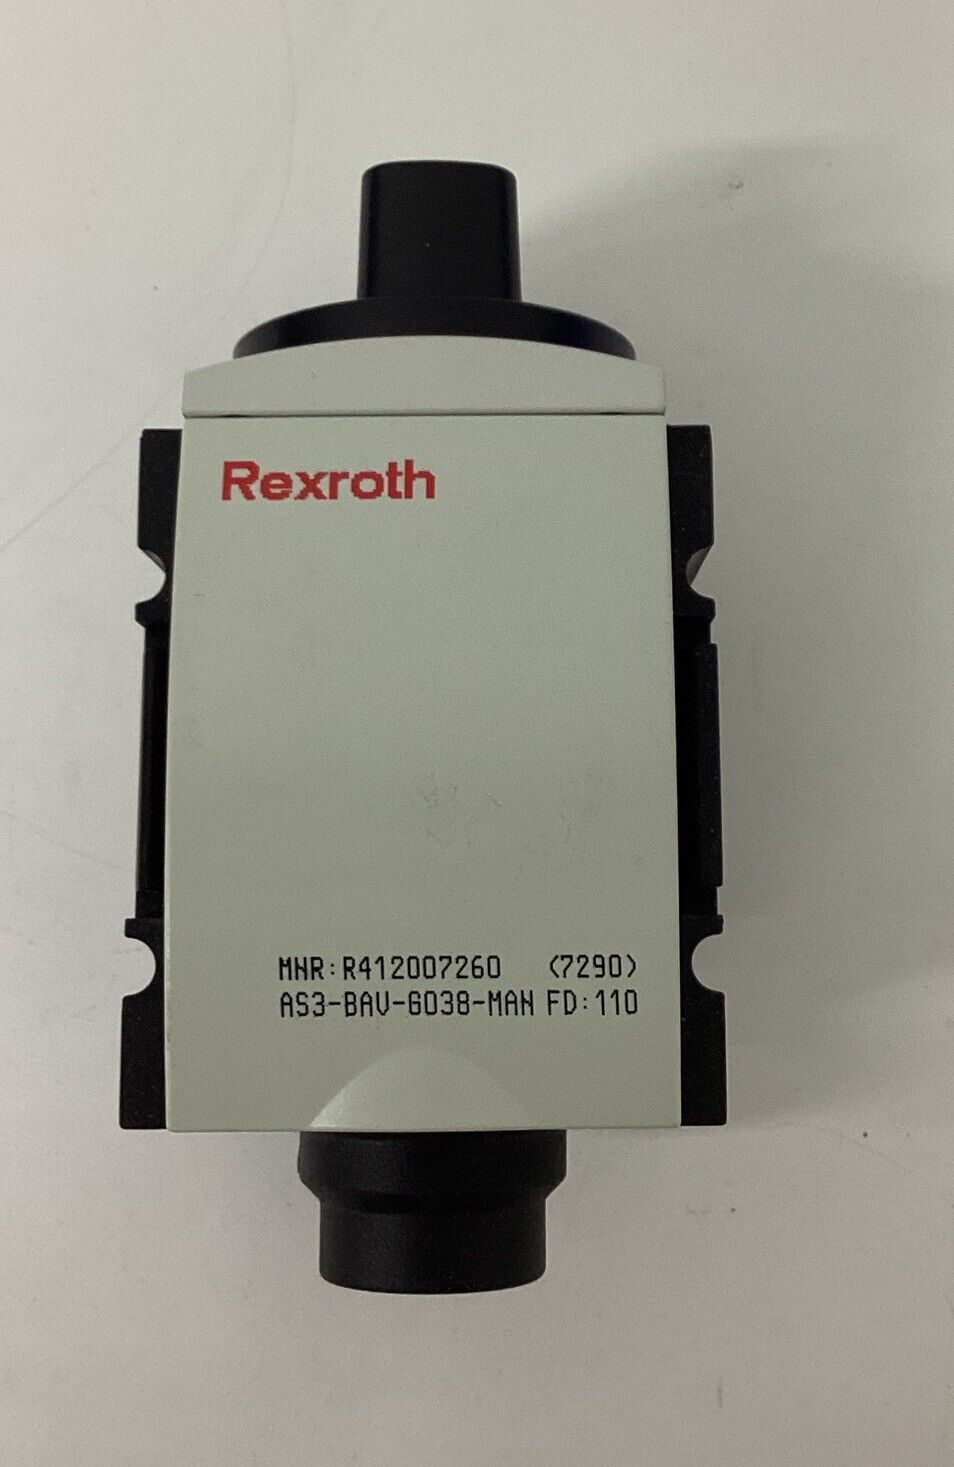 Rexroth Aventics R412007260 Lockout Pneumatic Valve (CL382)